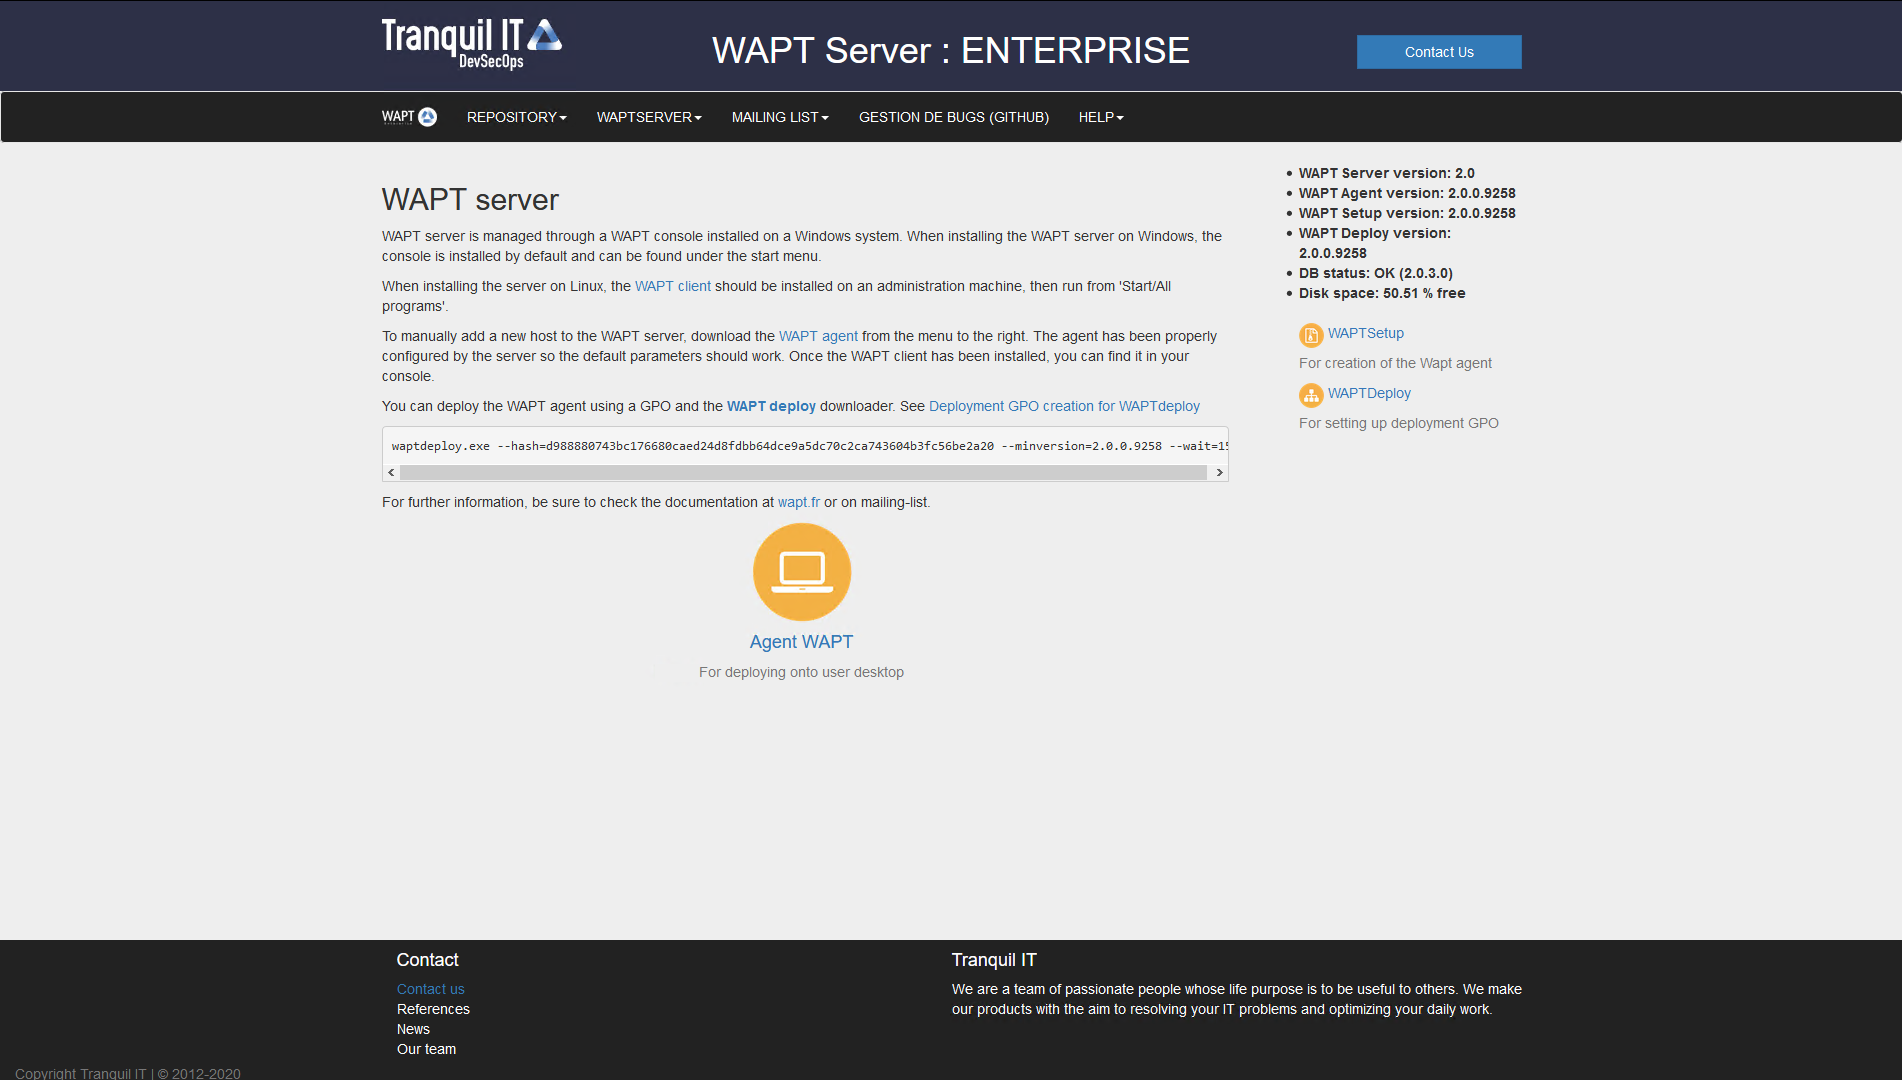 The WAPT Server web interface